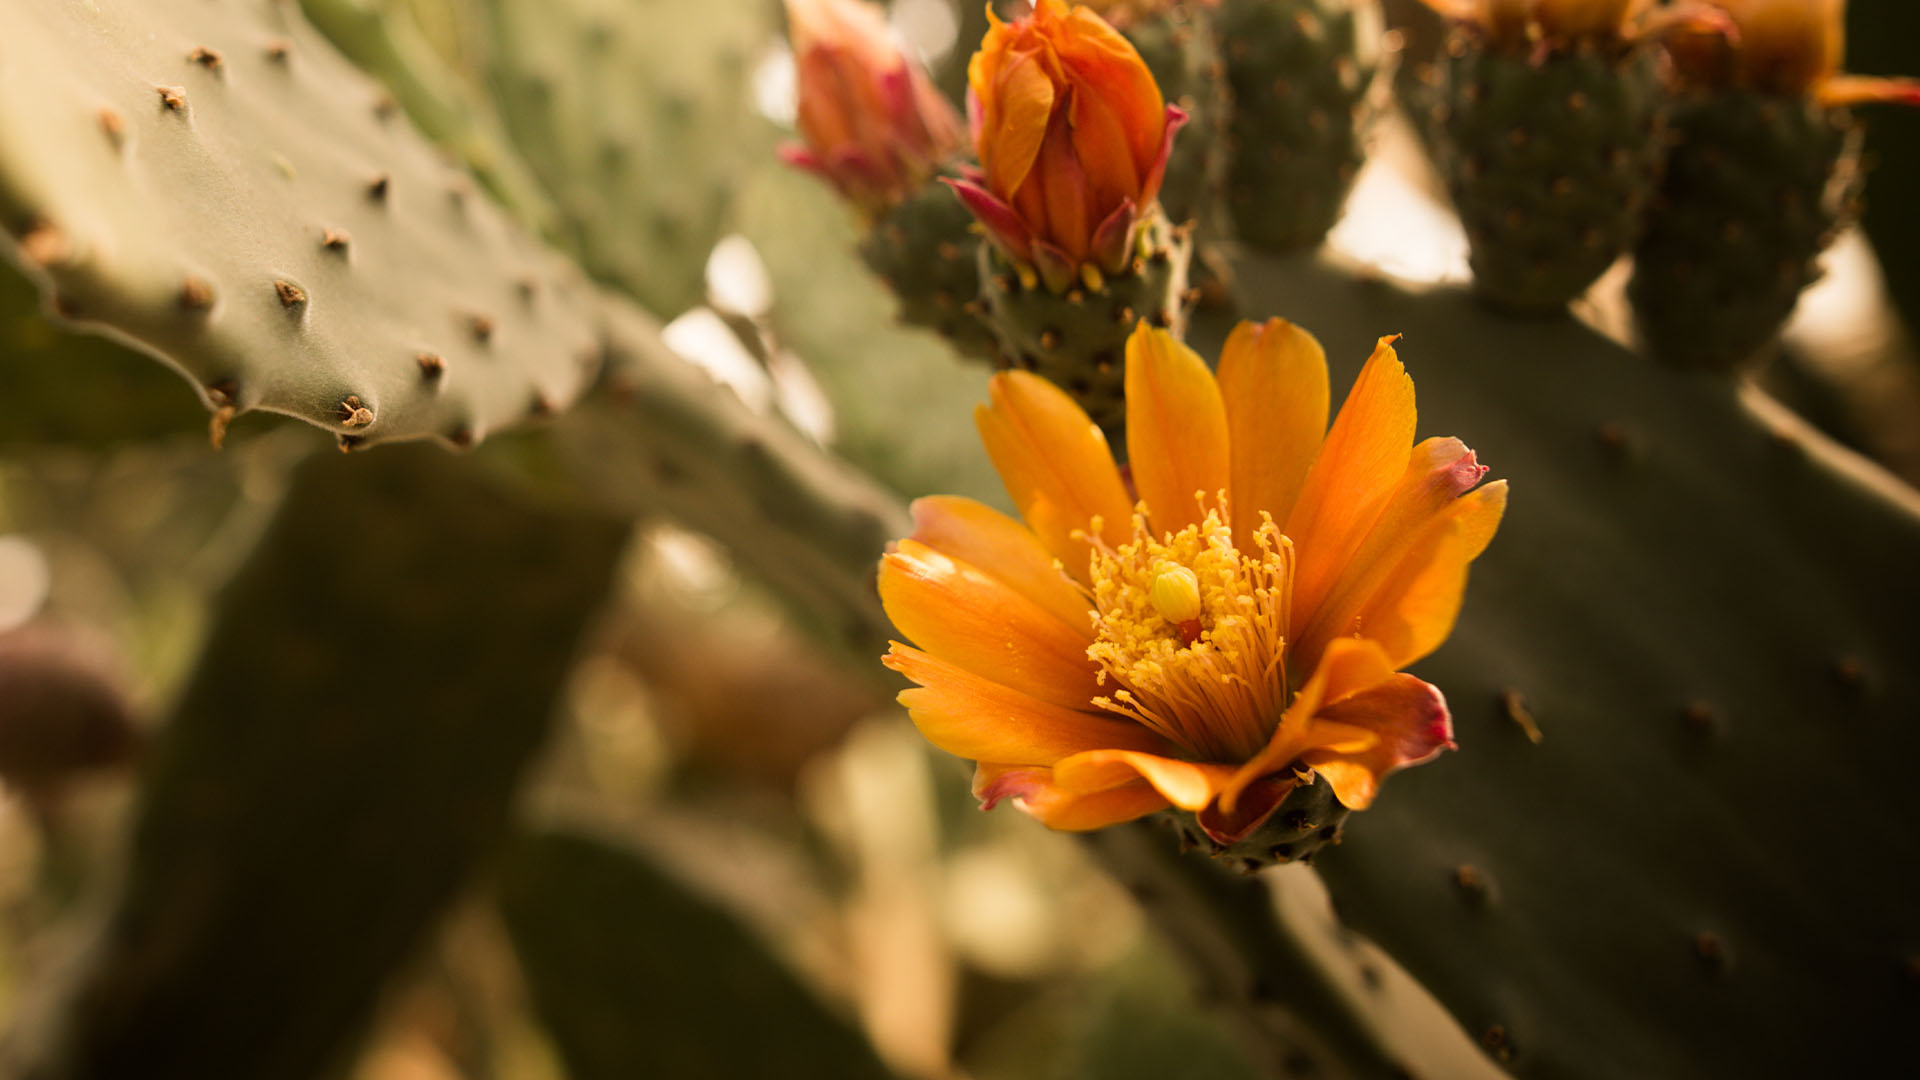 Cactus flower growing in desert